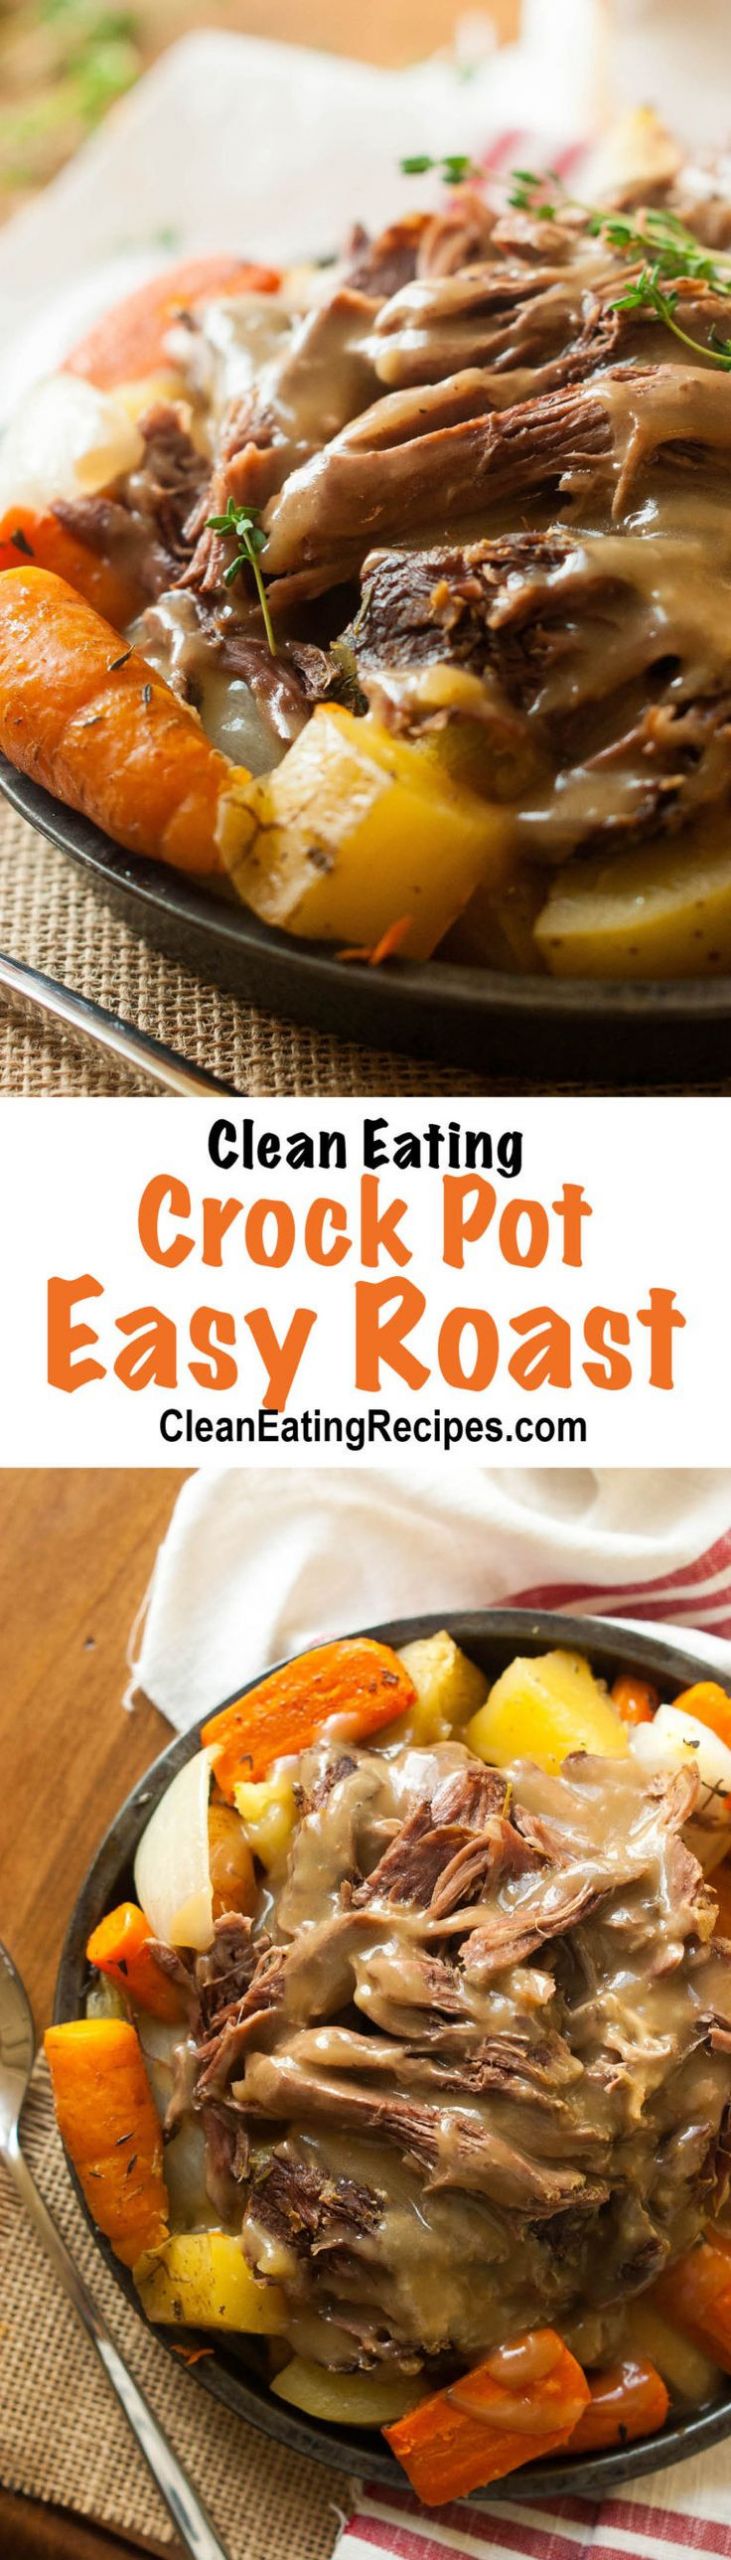 Clean Eating Crock Pot Meals
 28 best images about Clean eating crock pot recipes on